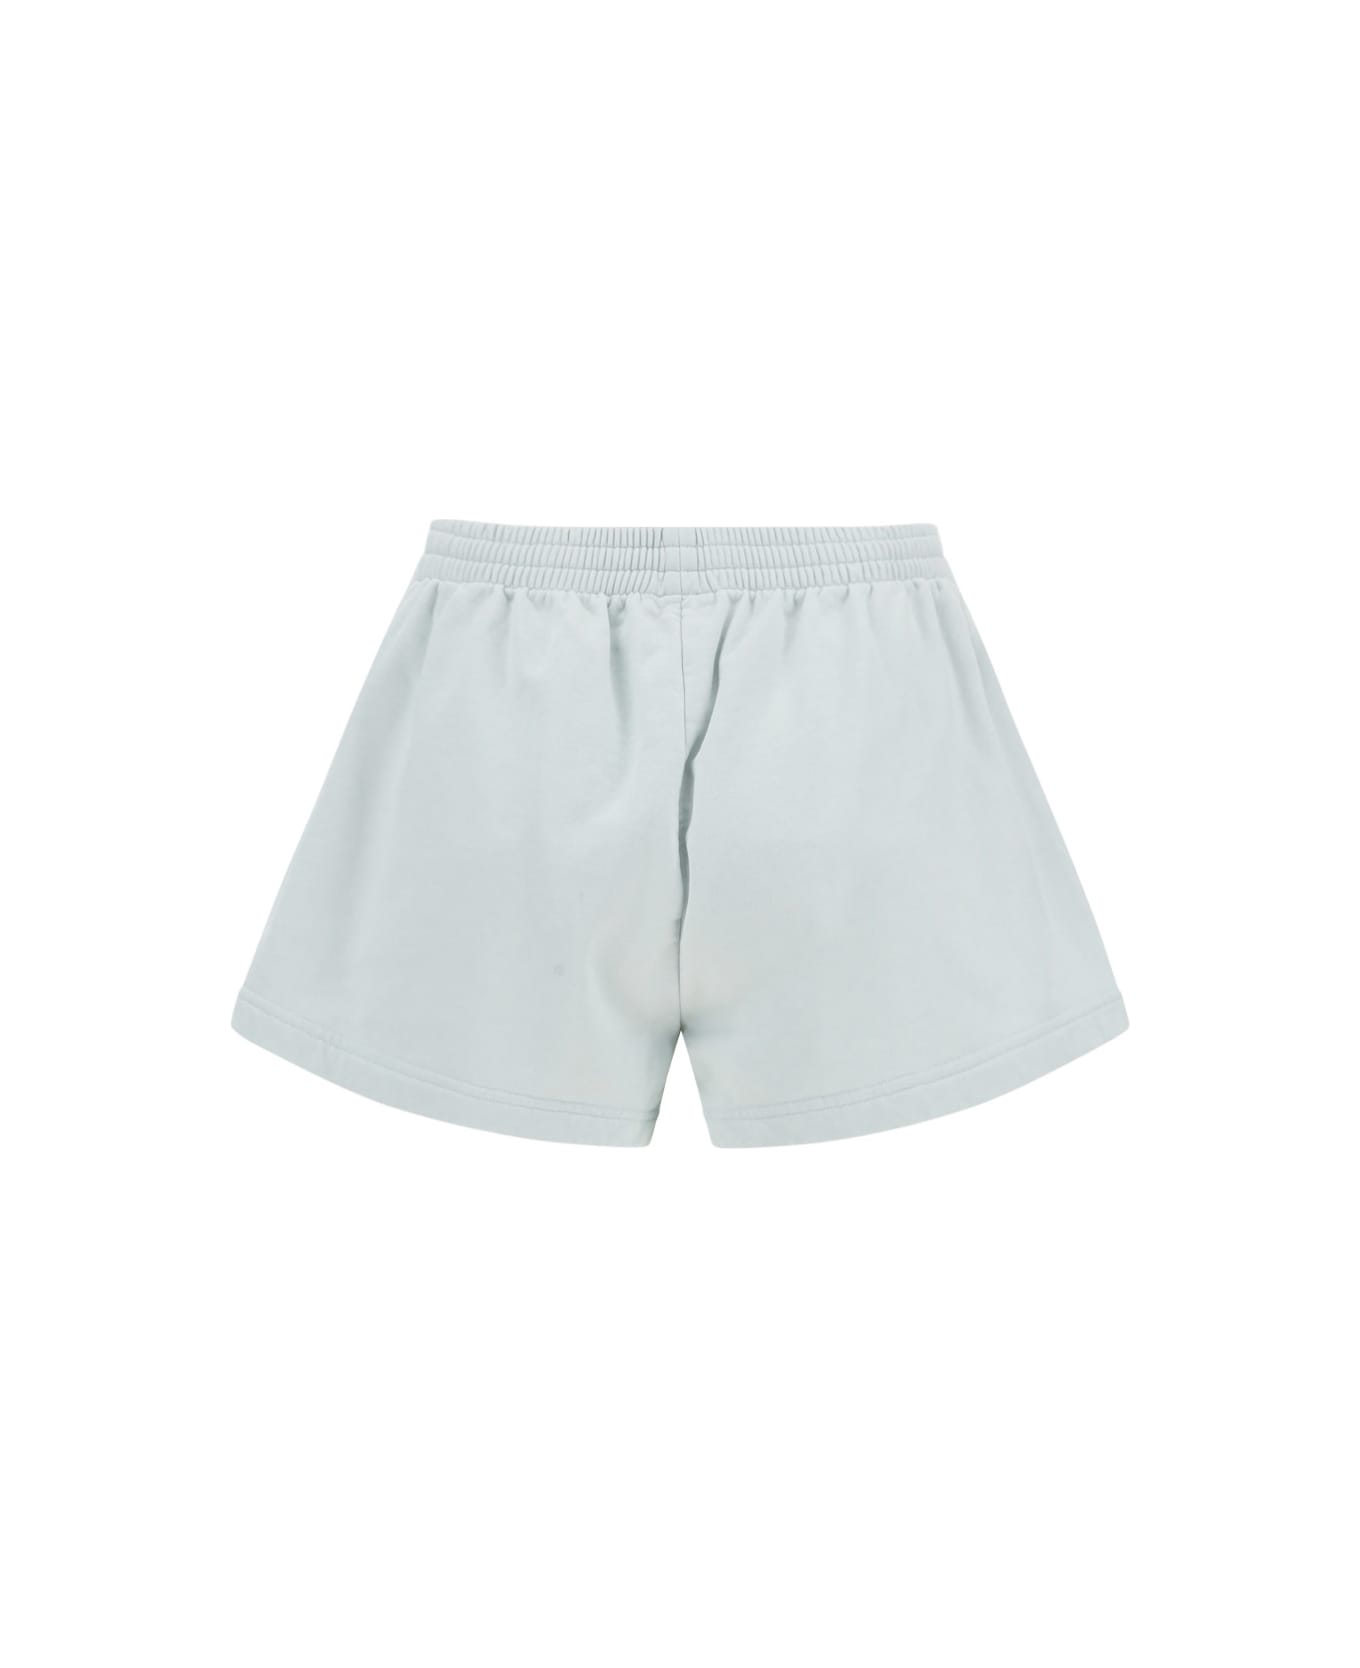 Balenciaga Sweatpants Short - White